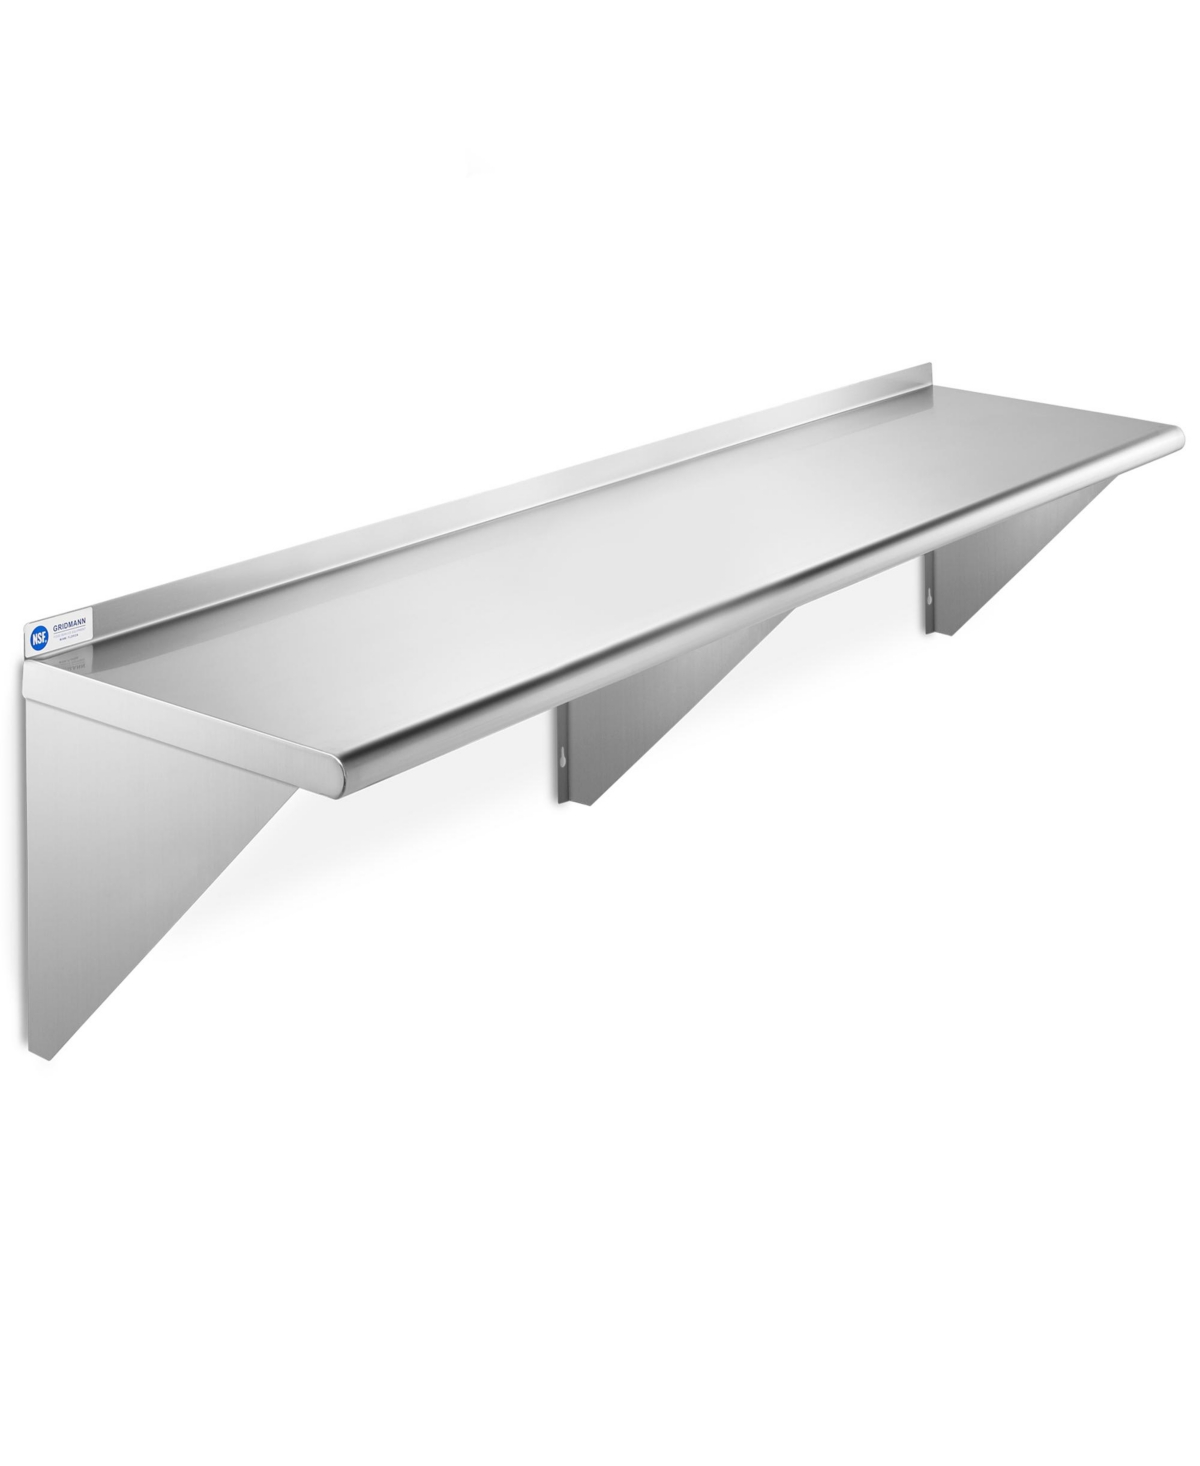 18" x 72" Nsf Stainless Steel Kitchen Wall Mount Shelf w/ Backsplash - Silver